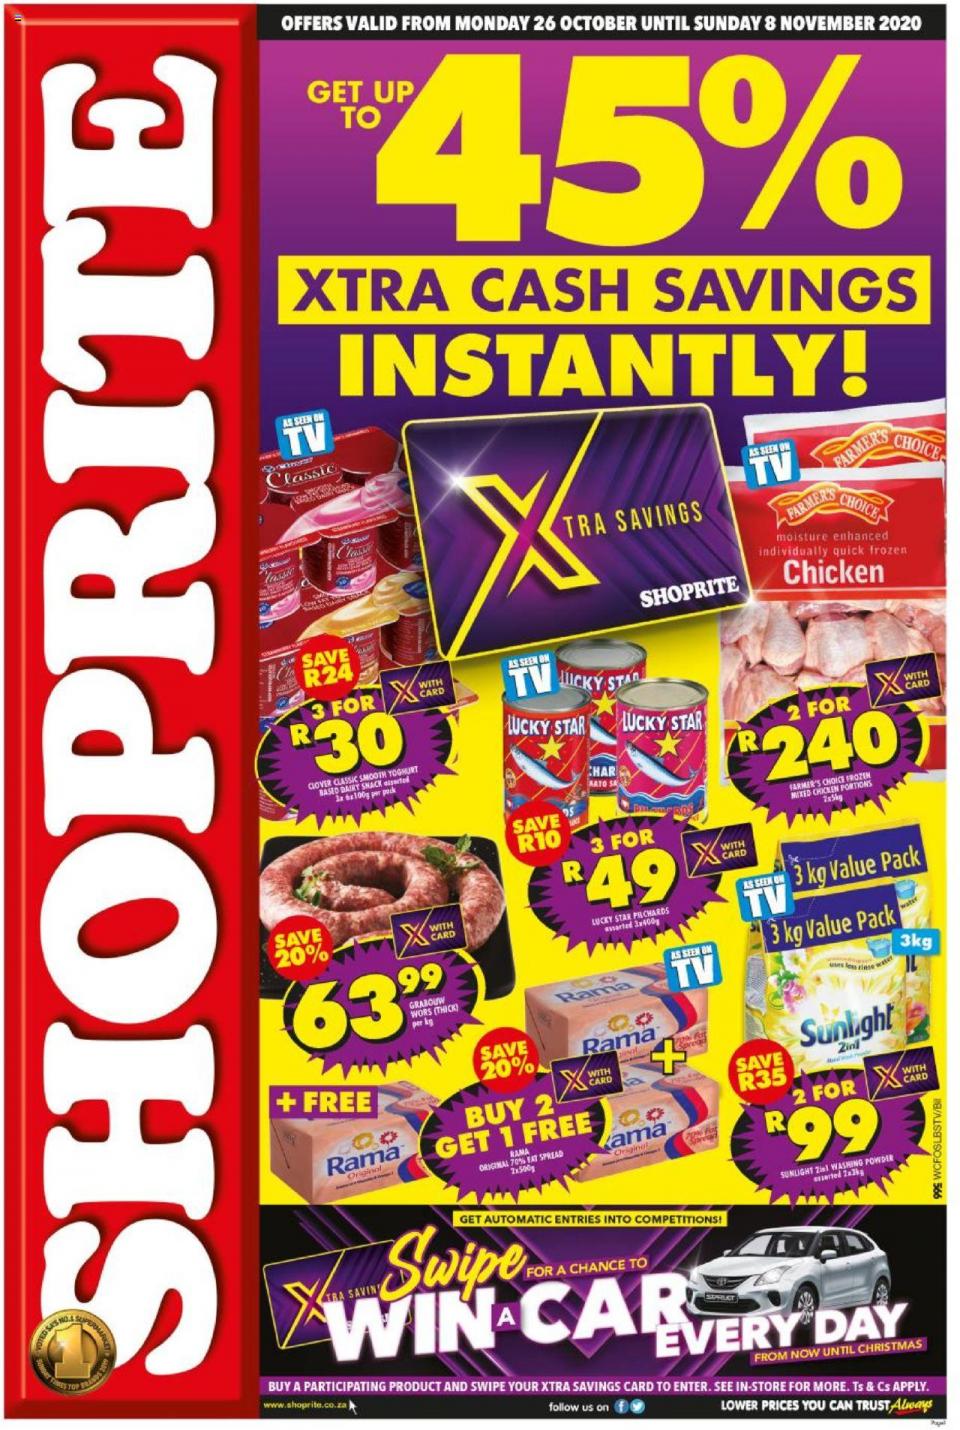 Shoprite Specials 45% Xtra Cash Savings 26 October 2020